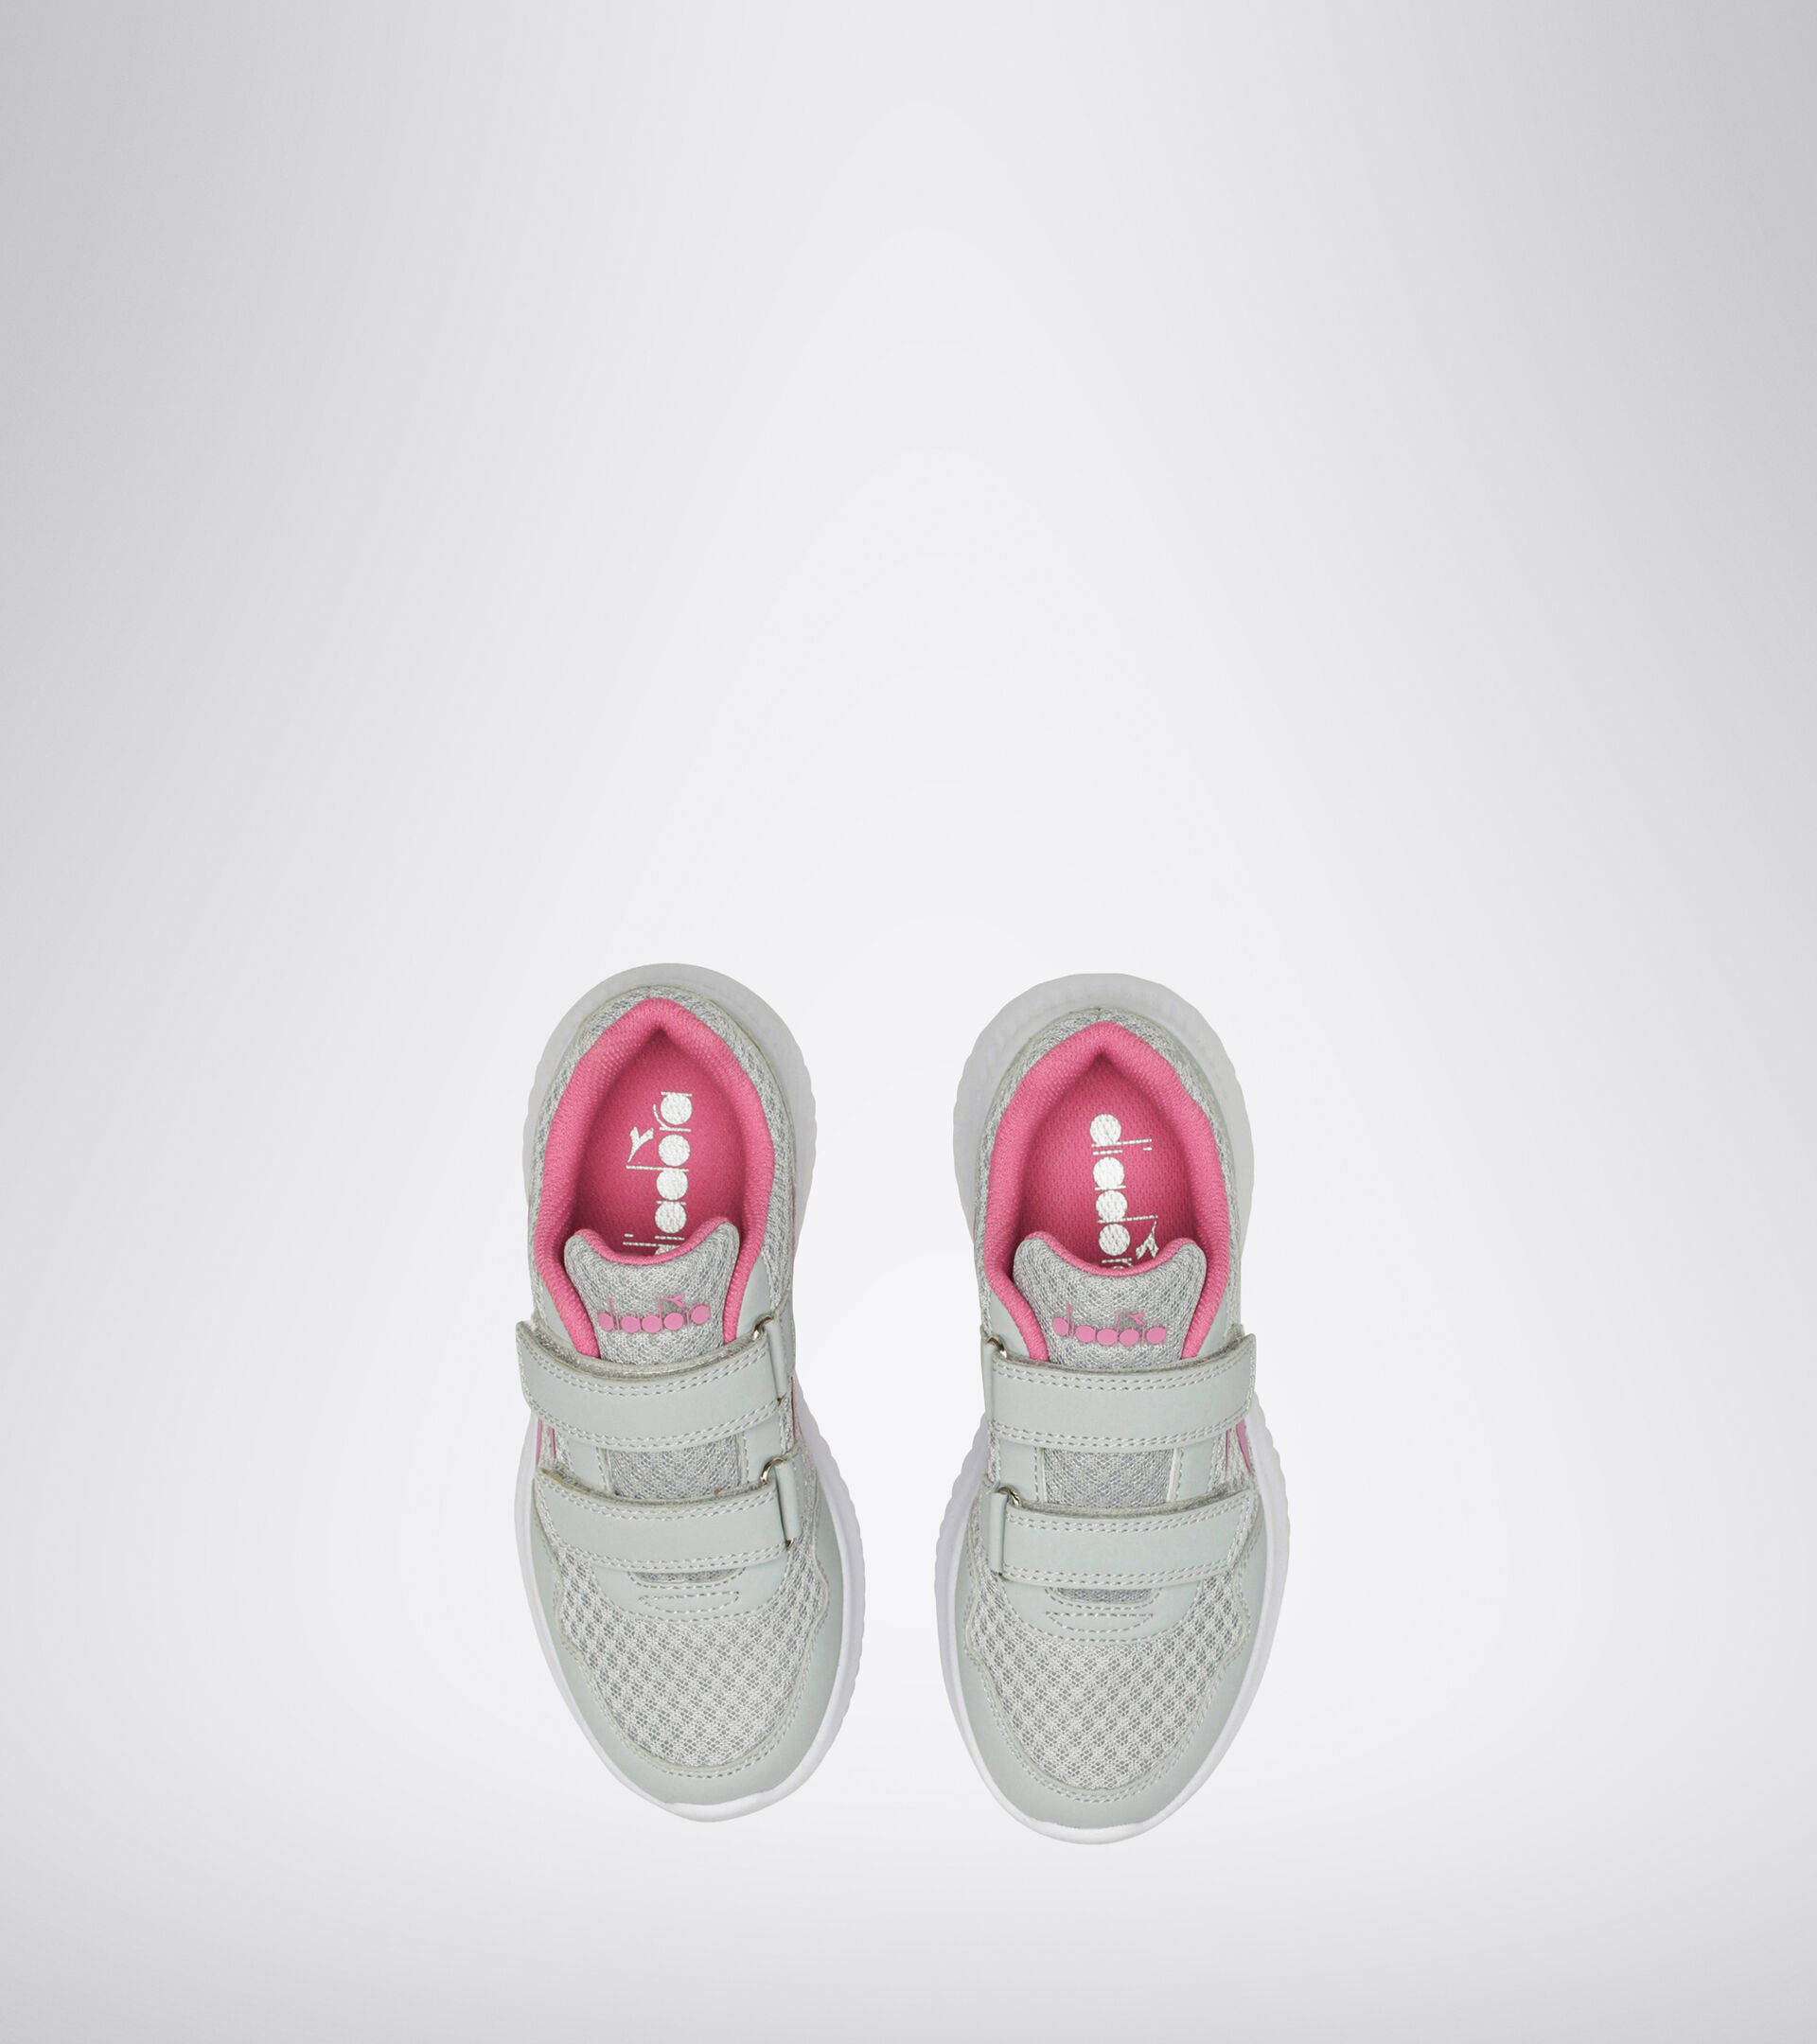 Chaussures de running - Unisexe enfant ROBIN 2 JR V ARGENT/ORCHIDEE SAUVAGE - Diadora